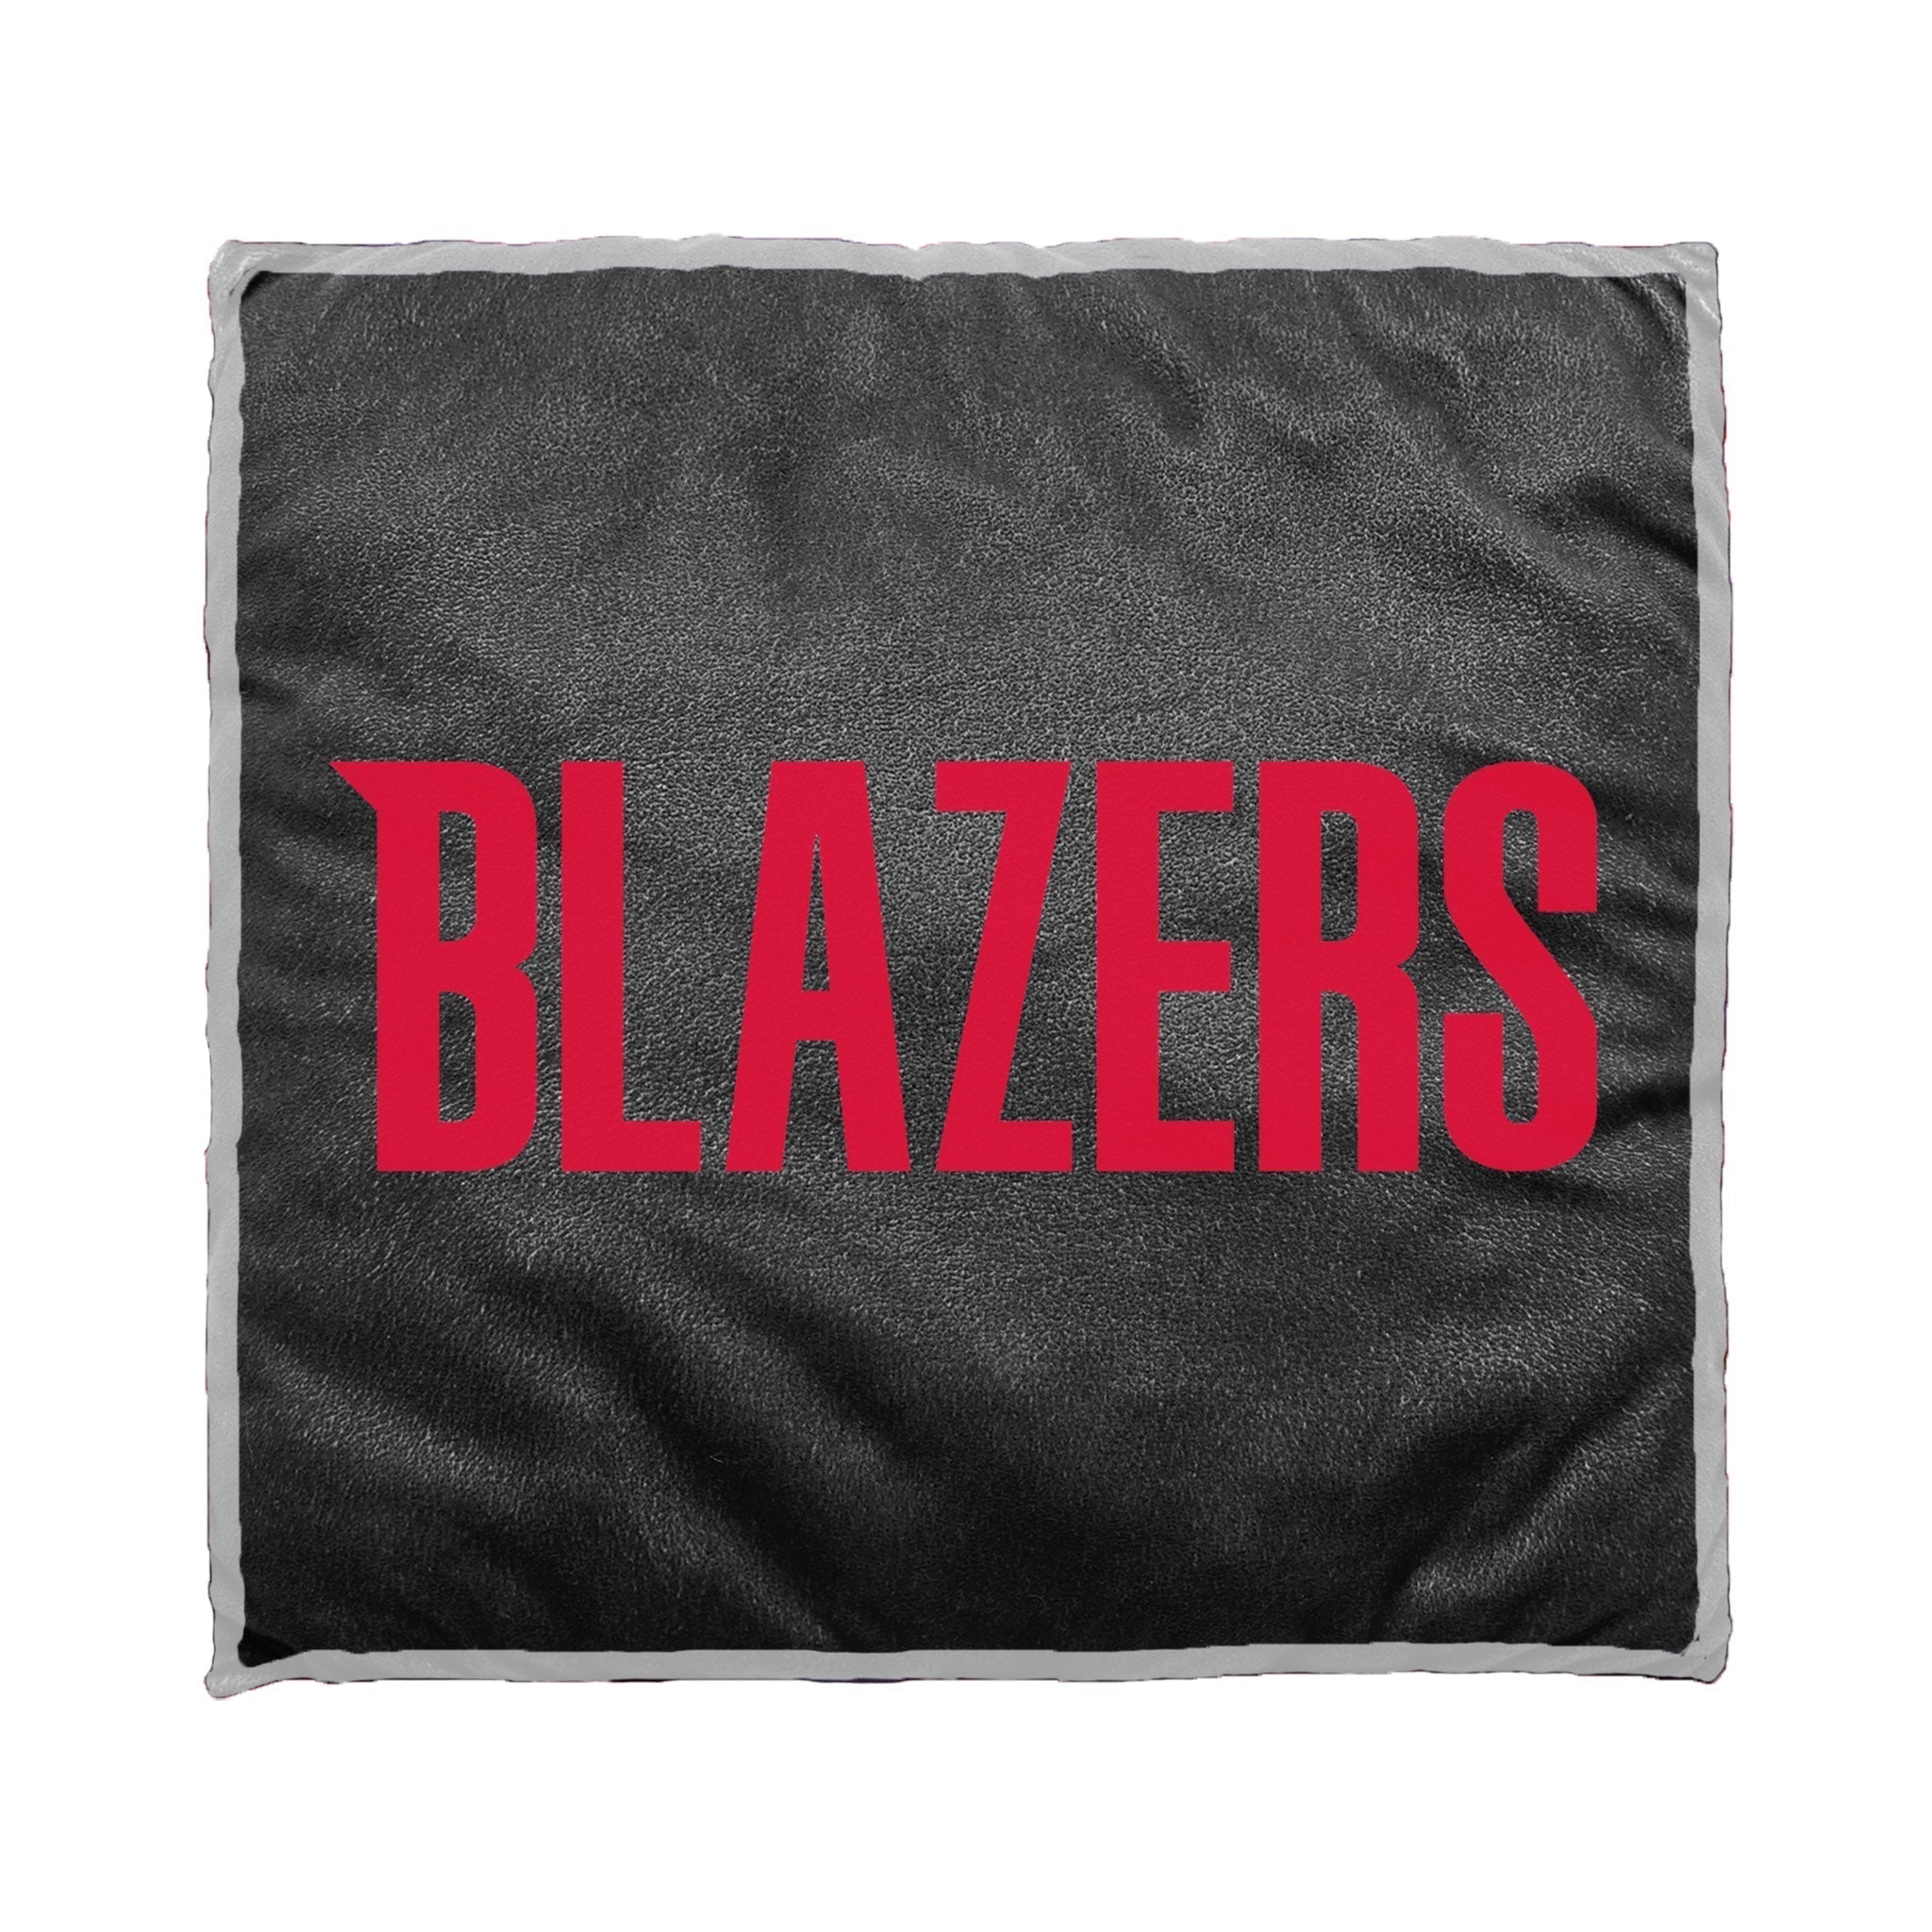 Trail Blazers Pillow